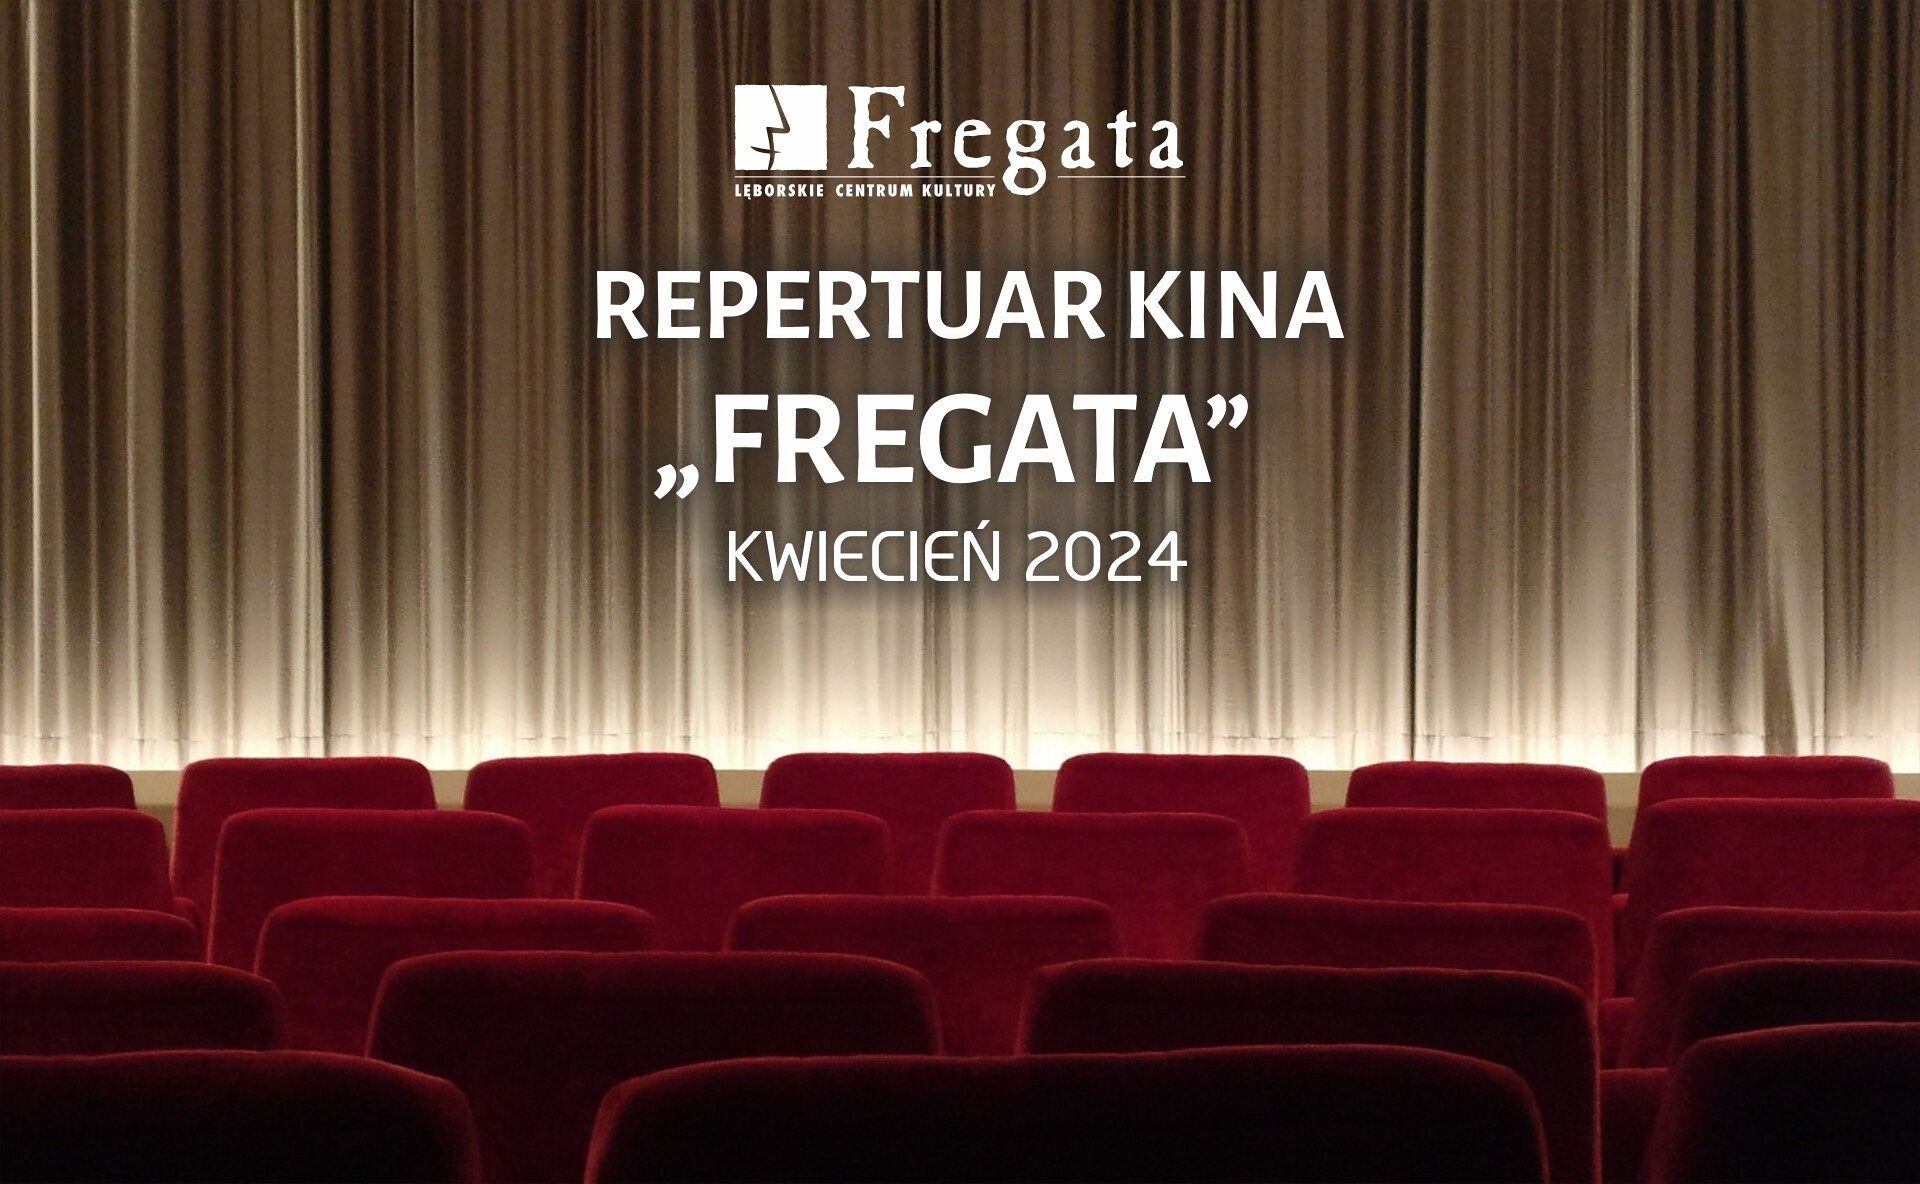 Repertuar kina "Fregata" - kwiecień 2024